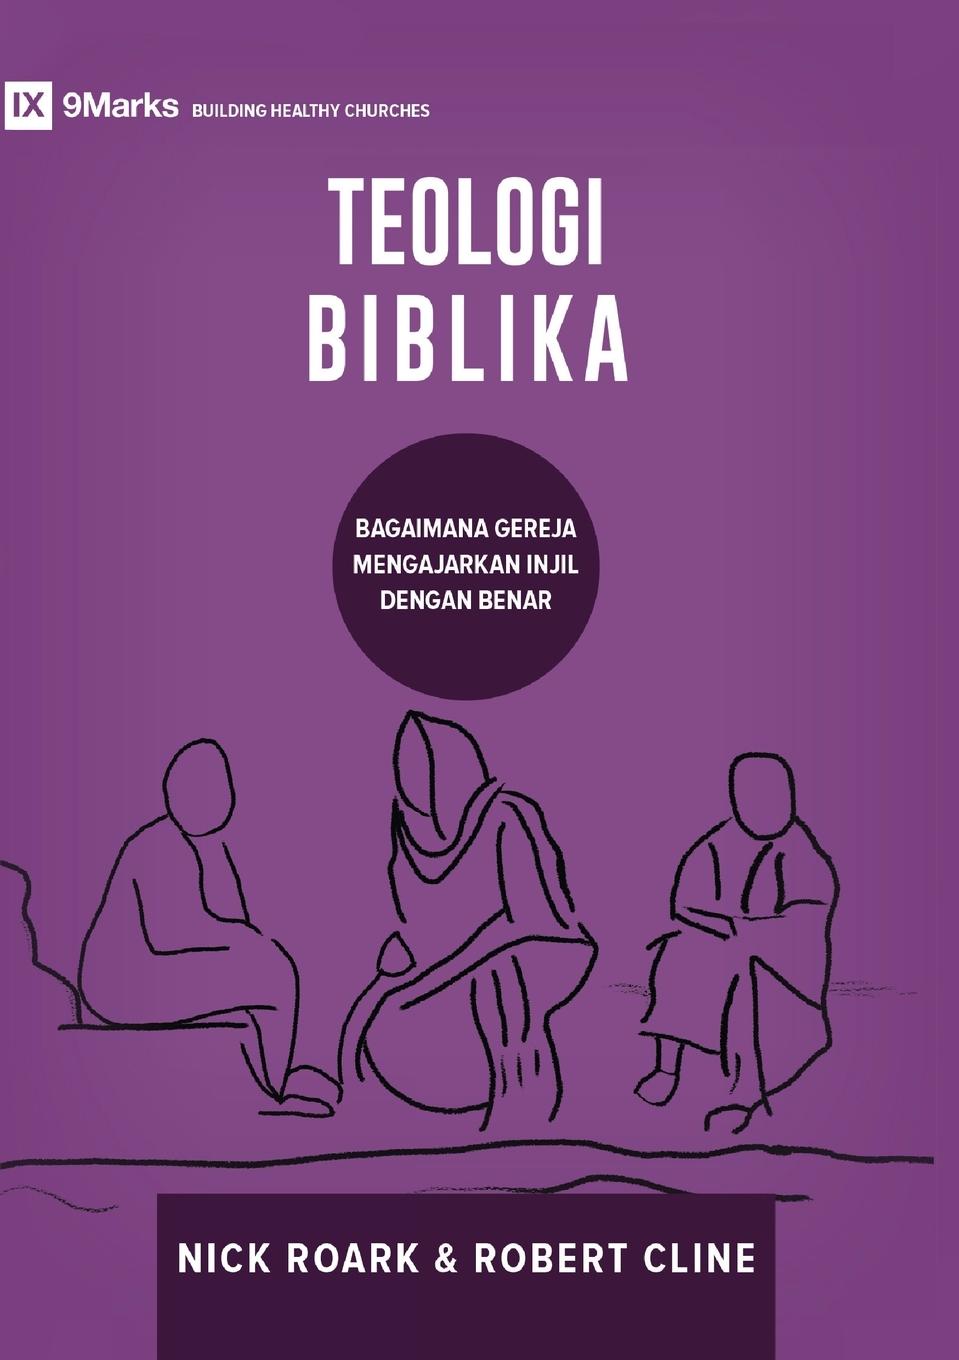 Kniha TEOLOGI BIBLIKA (Biblical Theology) (Indonesian) Robert Cline